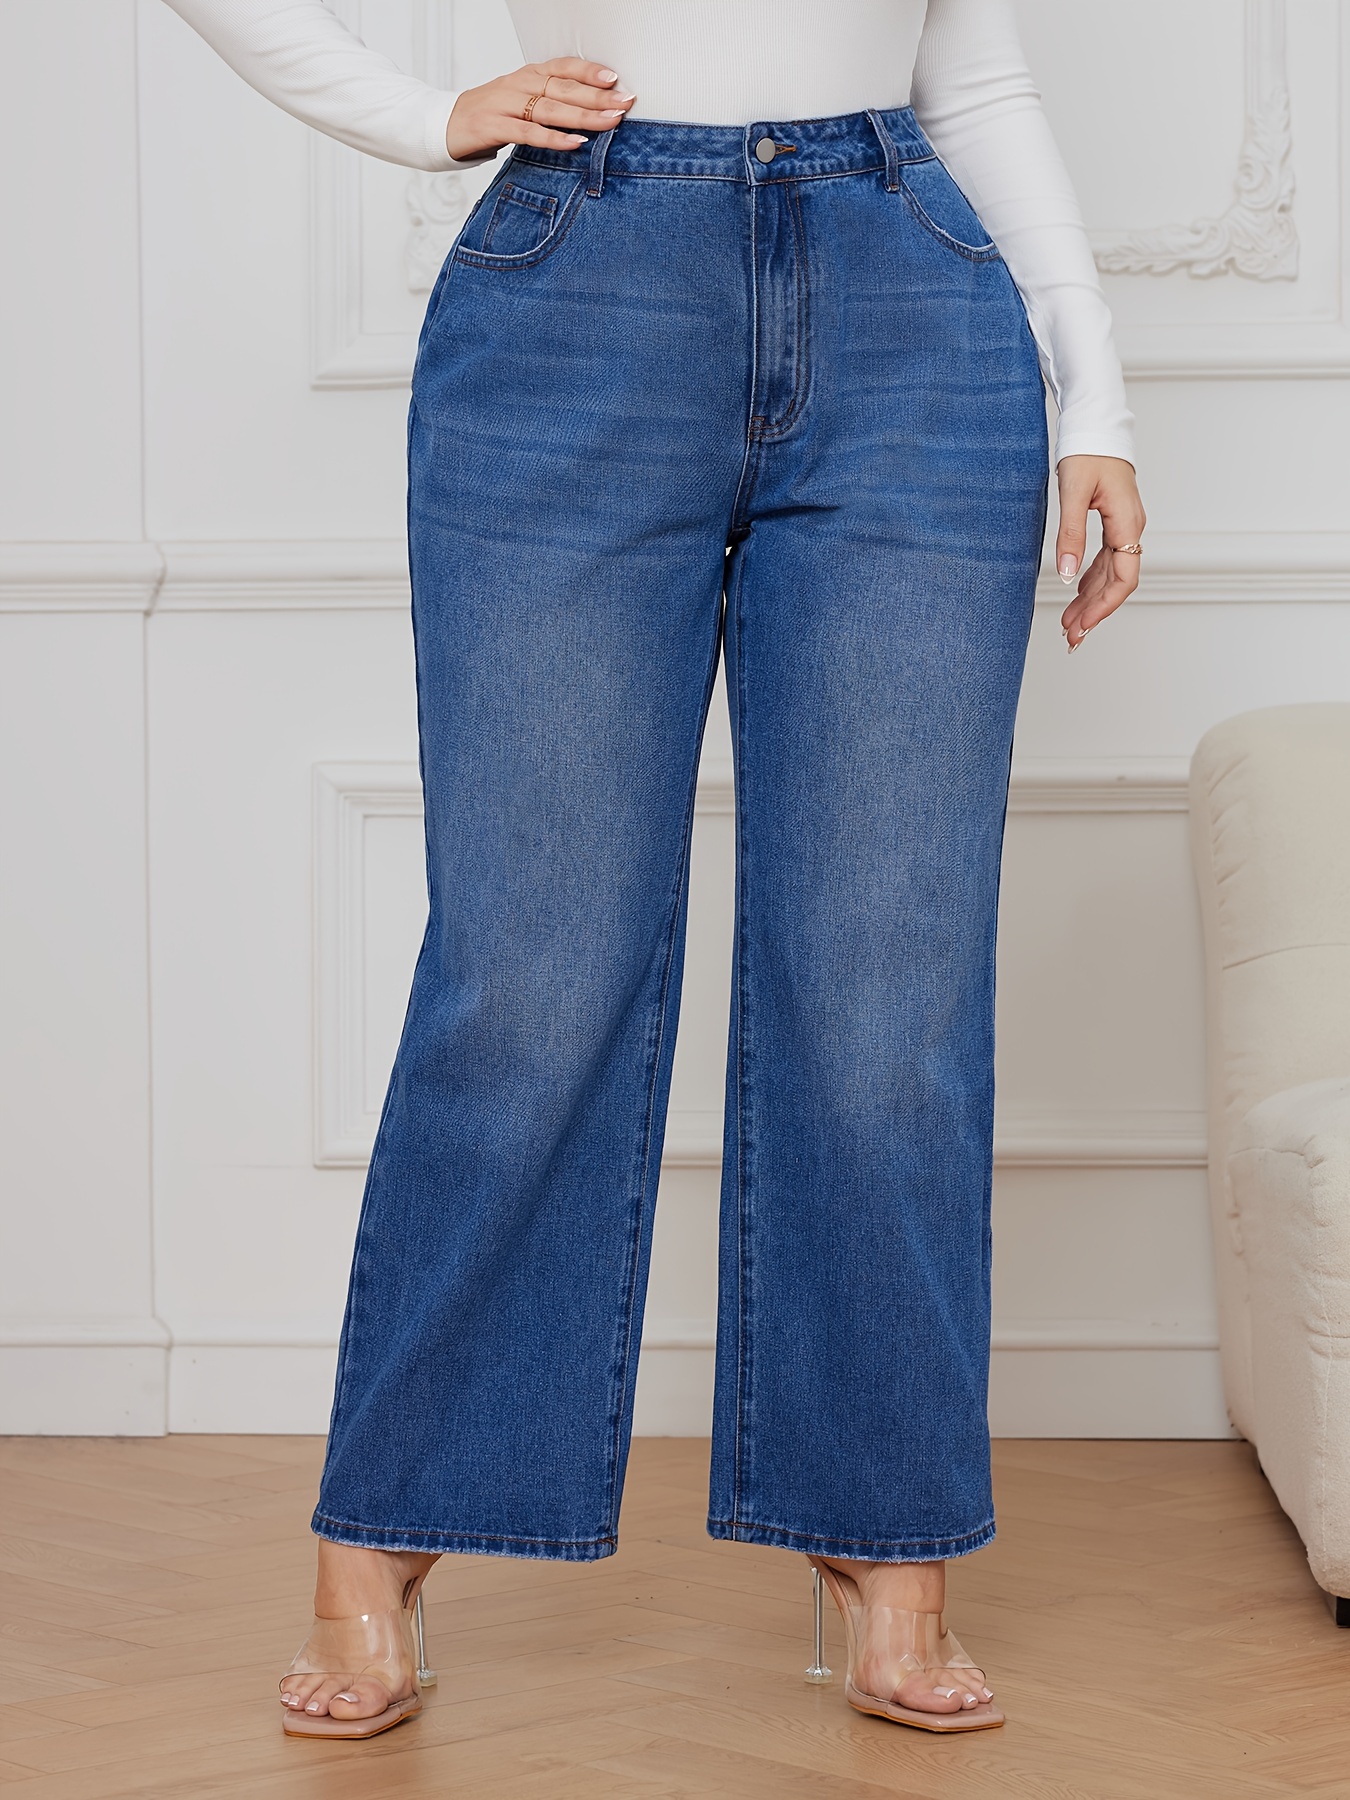 Efsteb Womens Jeans Leggings Casual Comfort Solid Color Hole Low Waist  Jeans Flares Ankle Fashion Pants Trouser Blue XL 